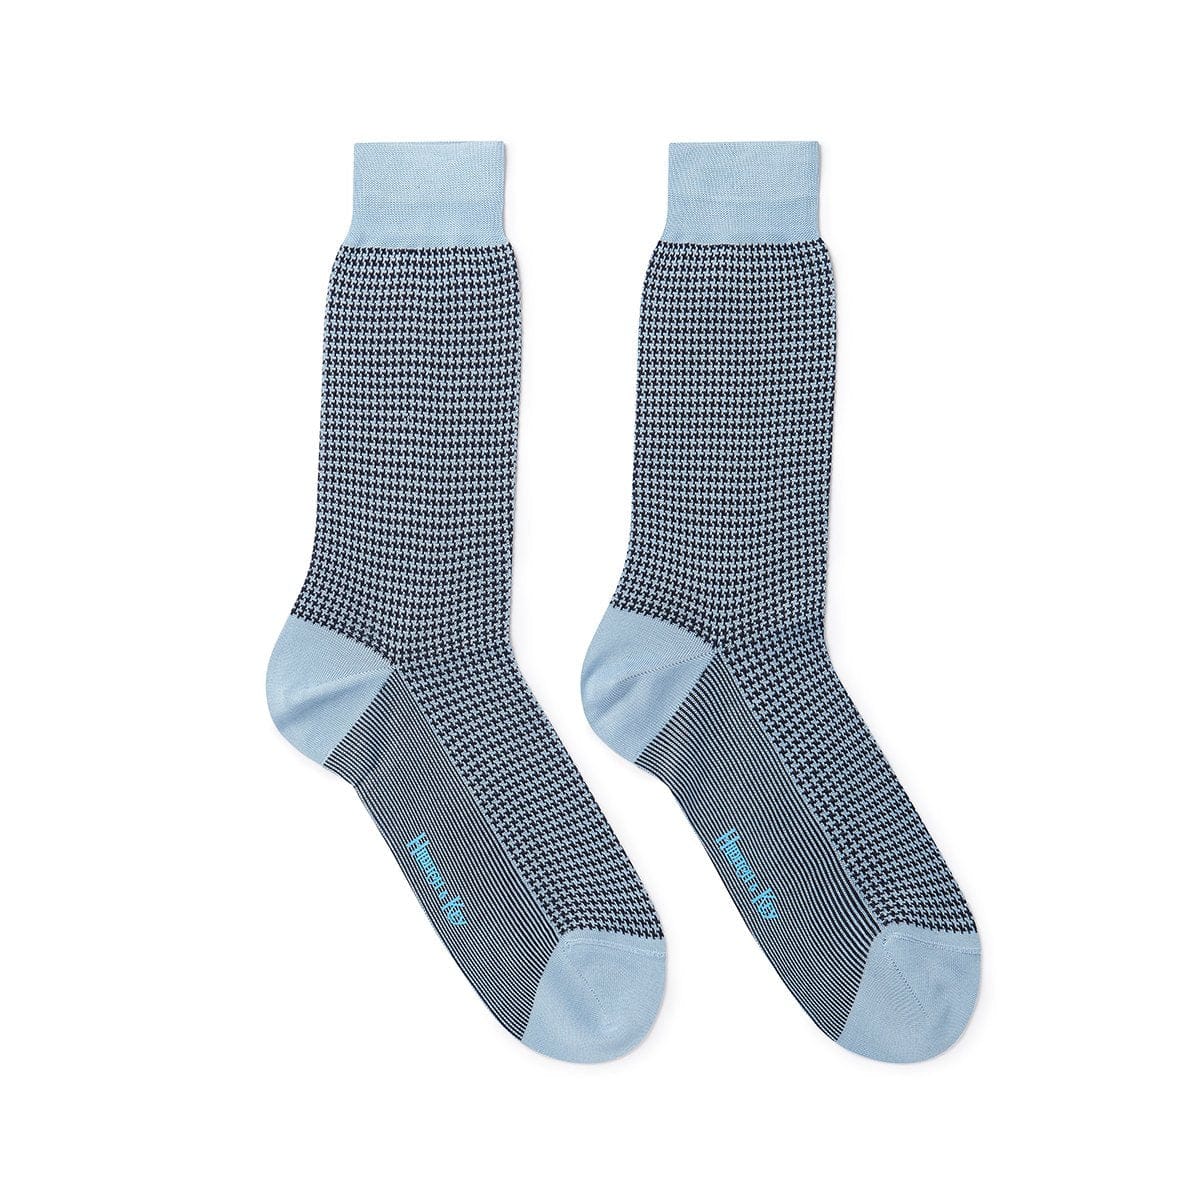 Short Pale Blue & Navy Houndstooth Cotton Socks